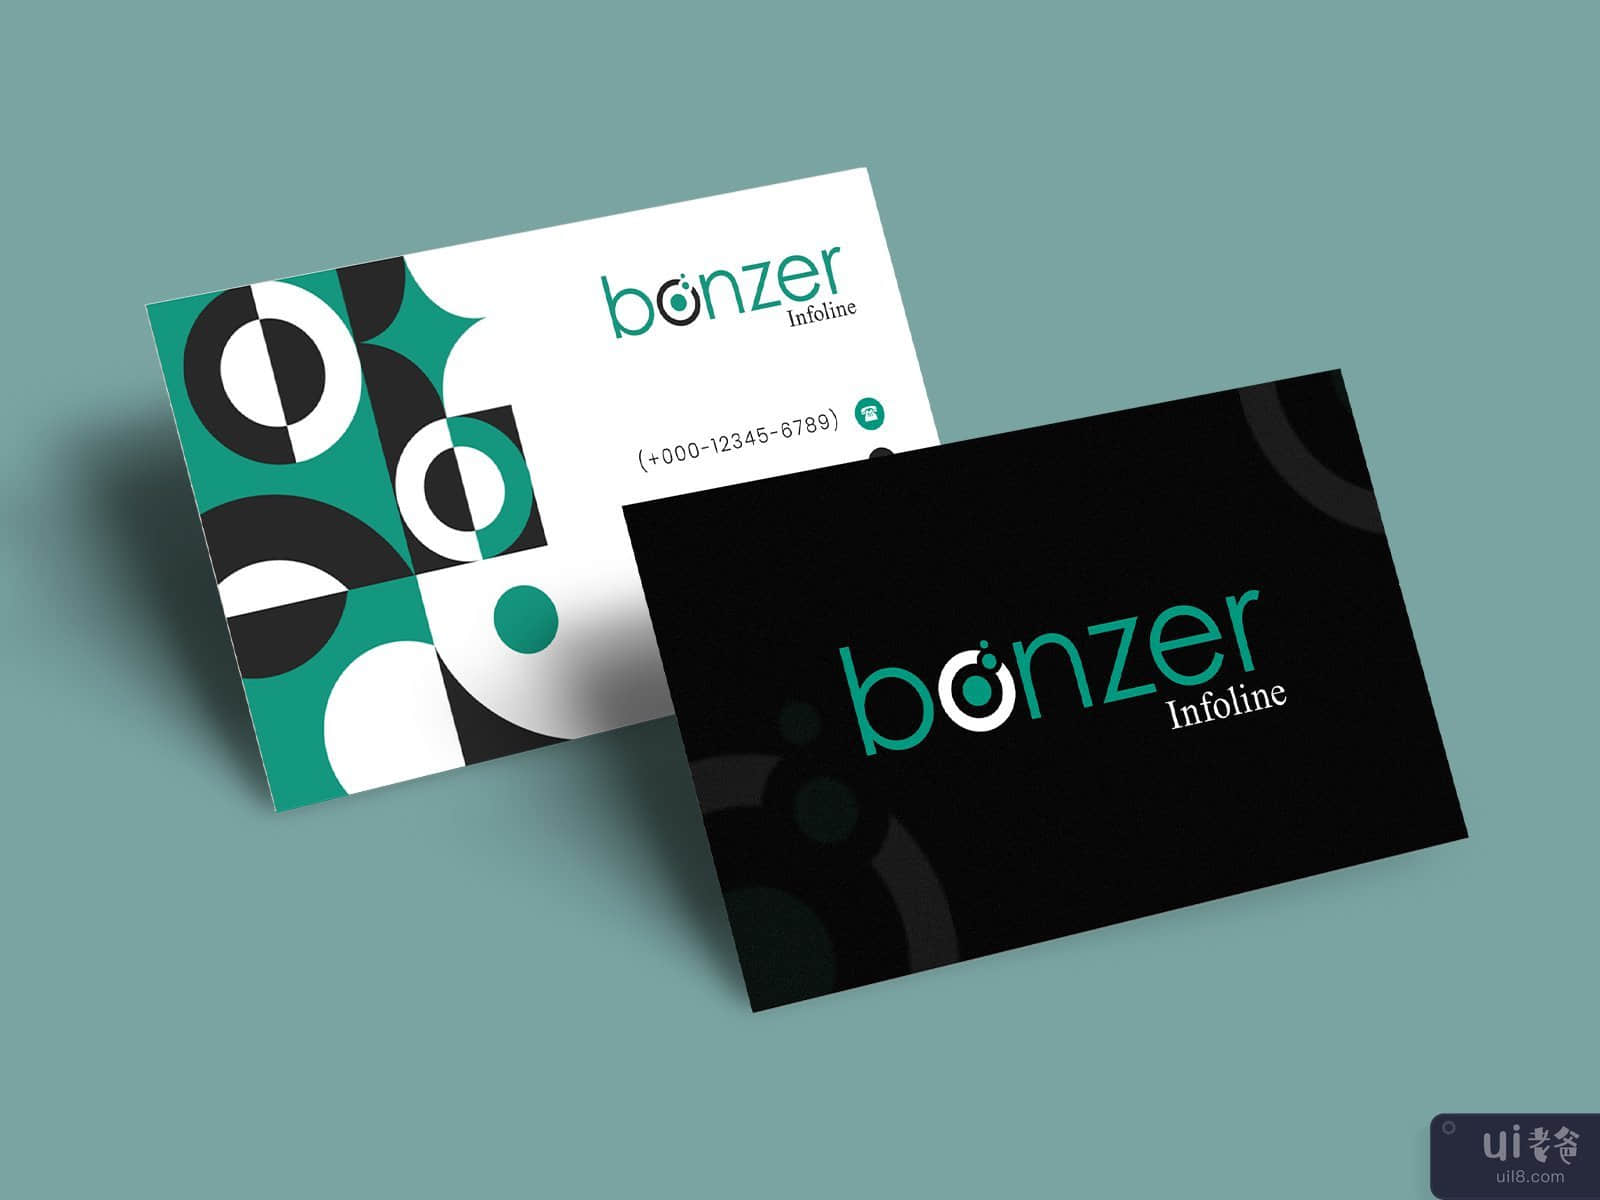 Bonzer ✨ Infoline 品牌宣传照(Bonzer✨ Infoline Branding Shot💻)插图5